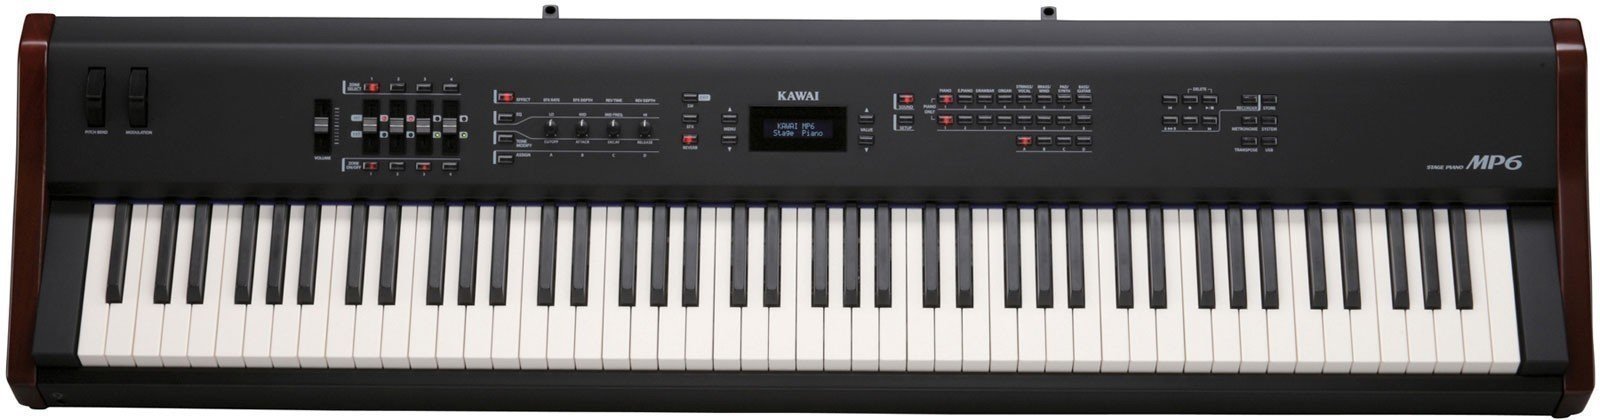 Digital Stage Piano Kawai MP6